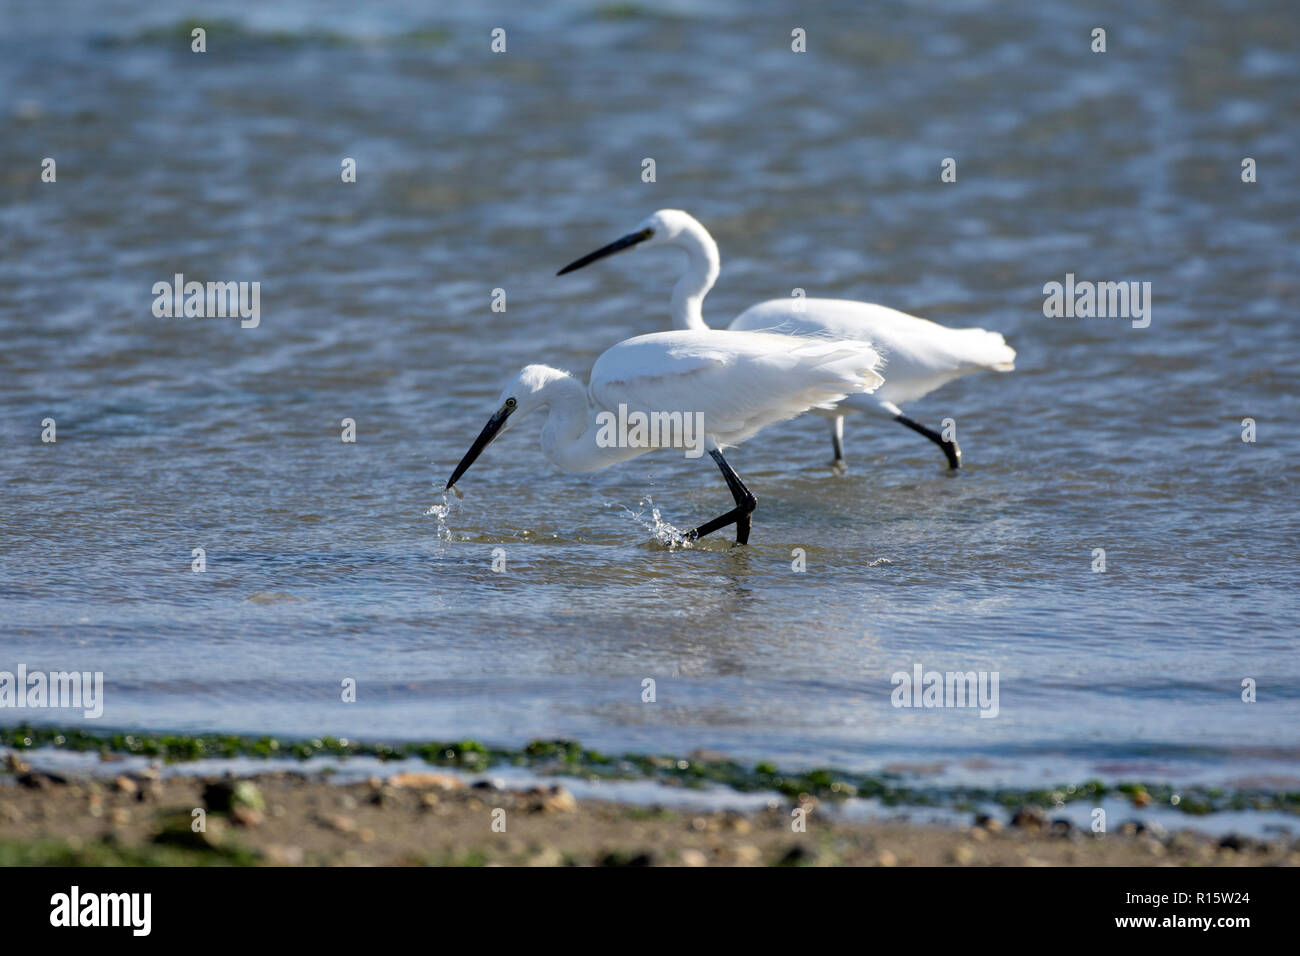 Pair of Little egrets fishing Stock Photo